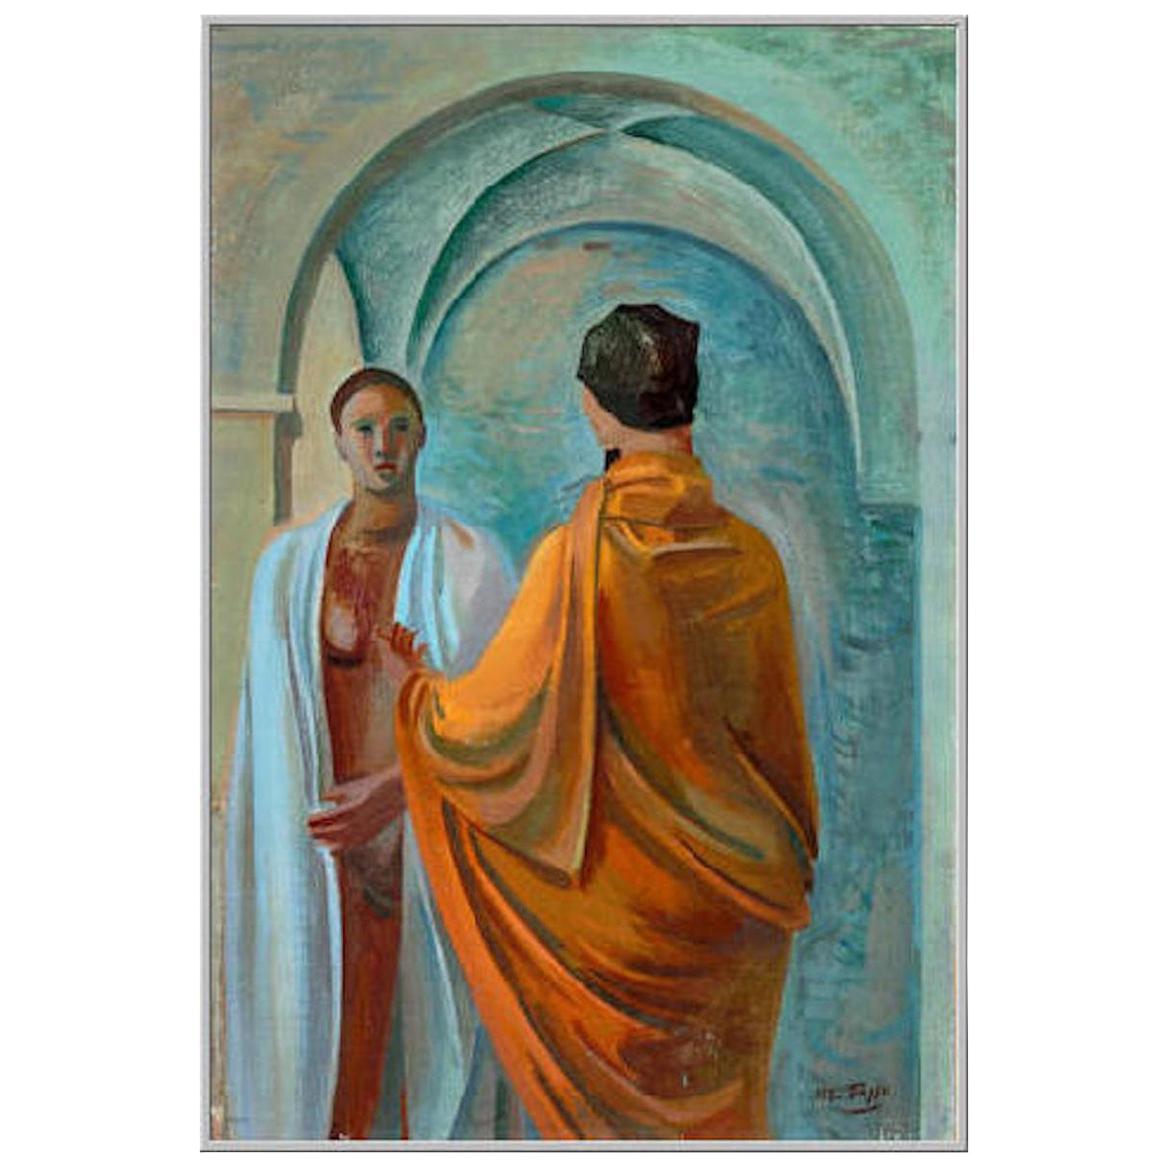 1943 Mario Tozzi "Confidenze" Oil on Canvas Painting